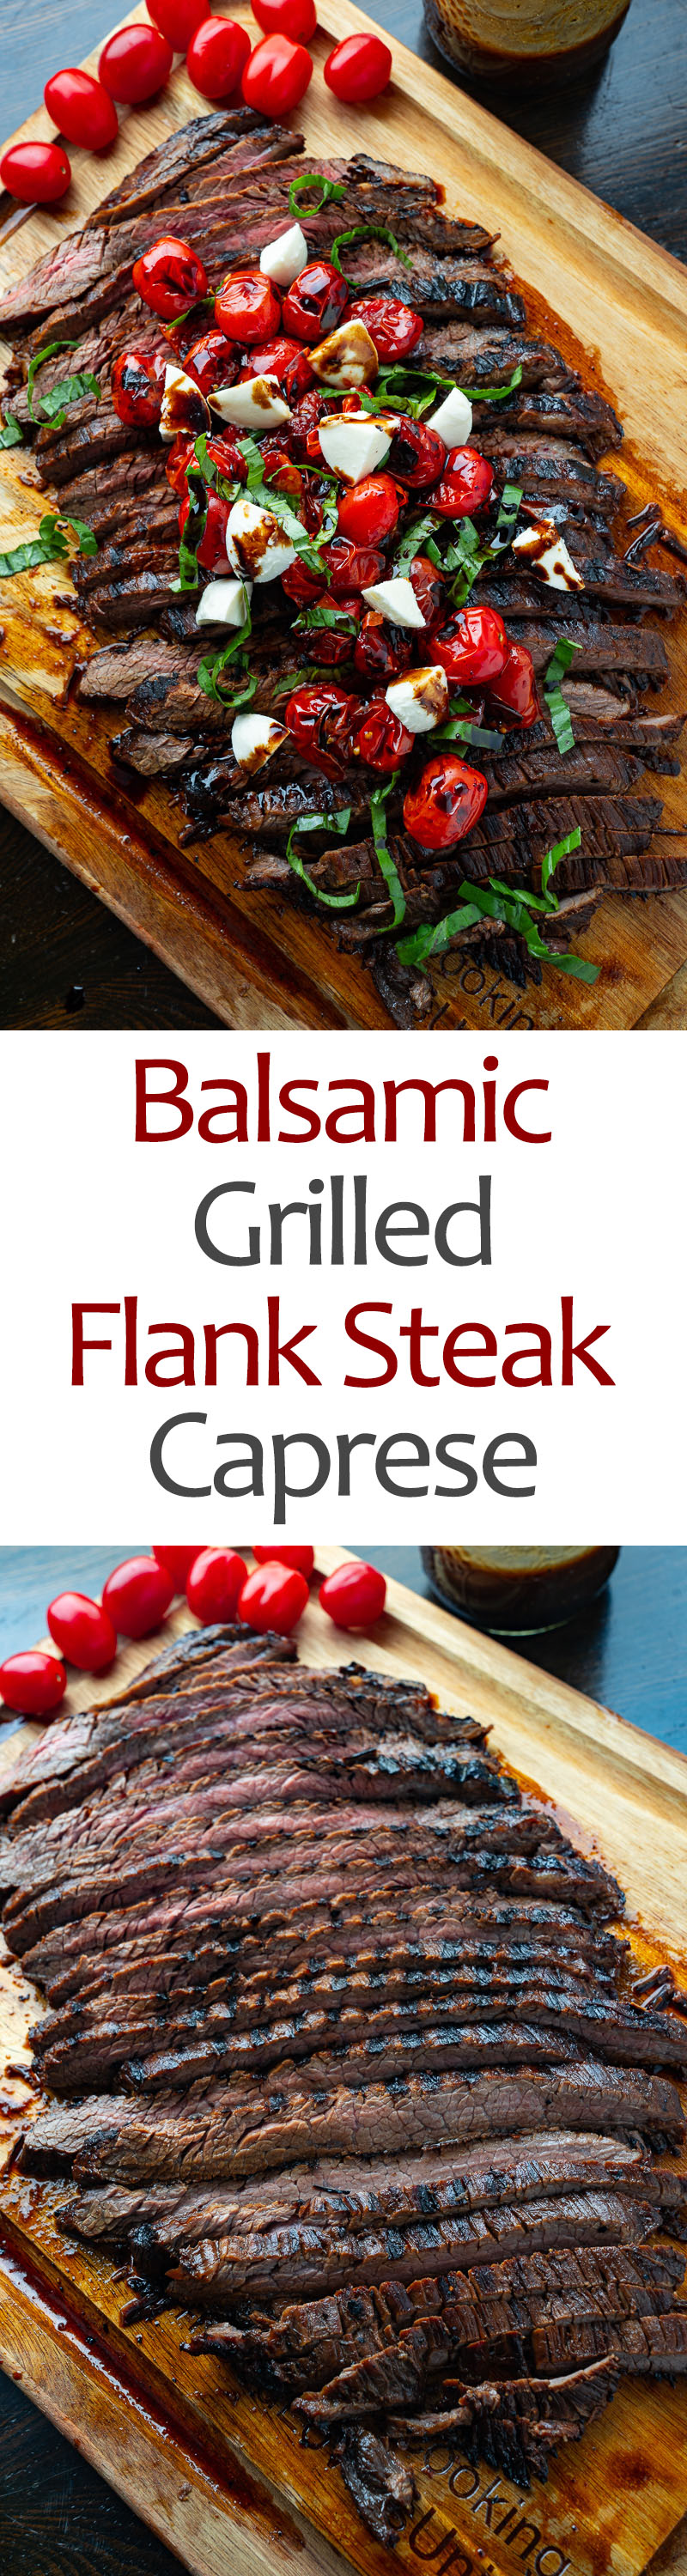 Balsamic Grilled Flank Steak Caprese